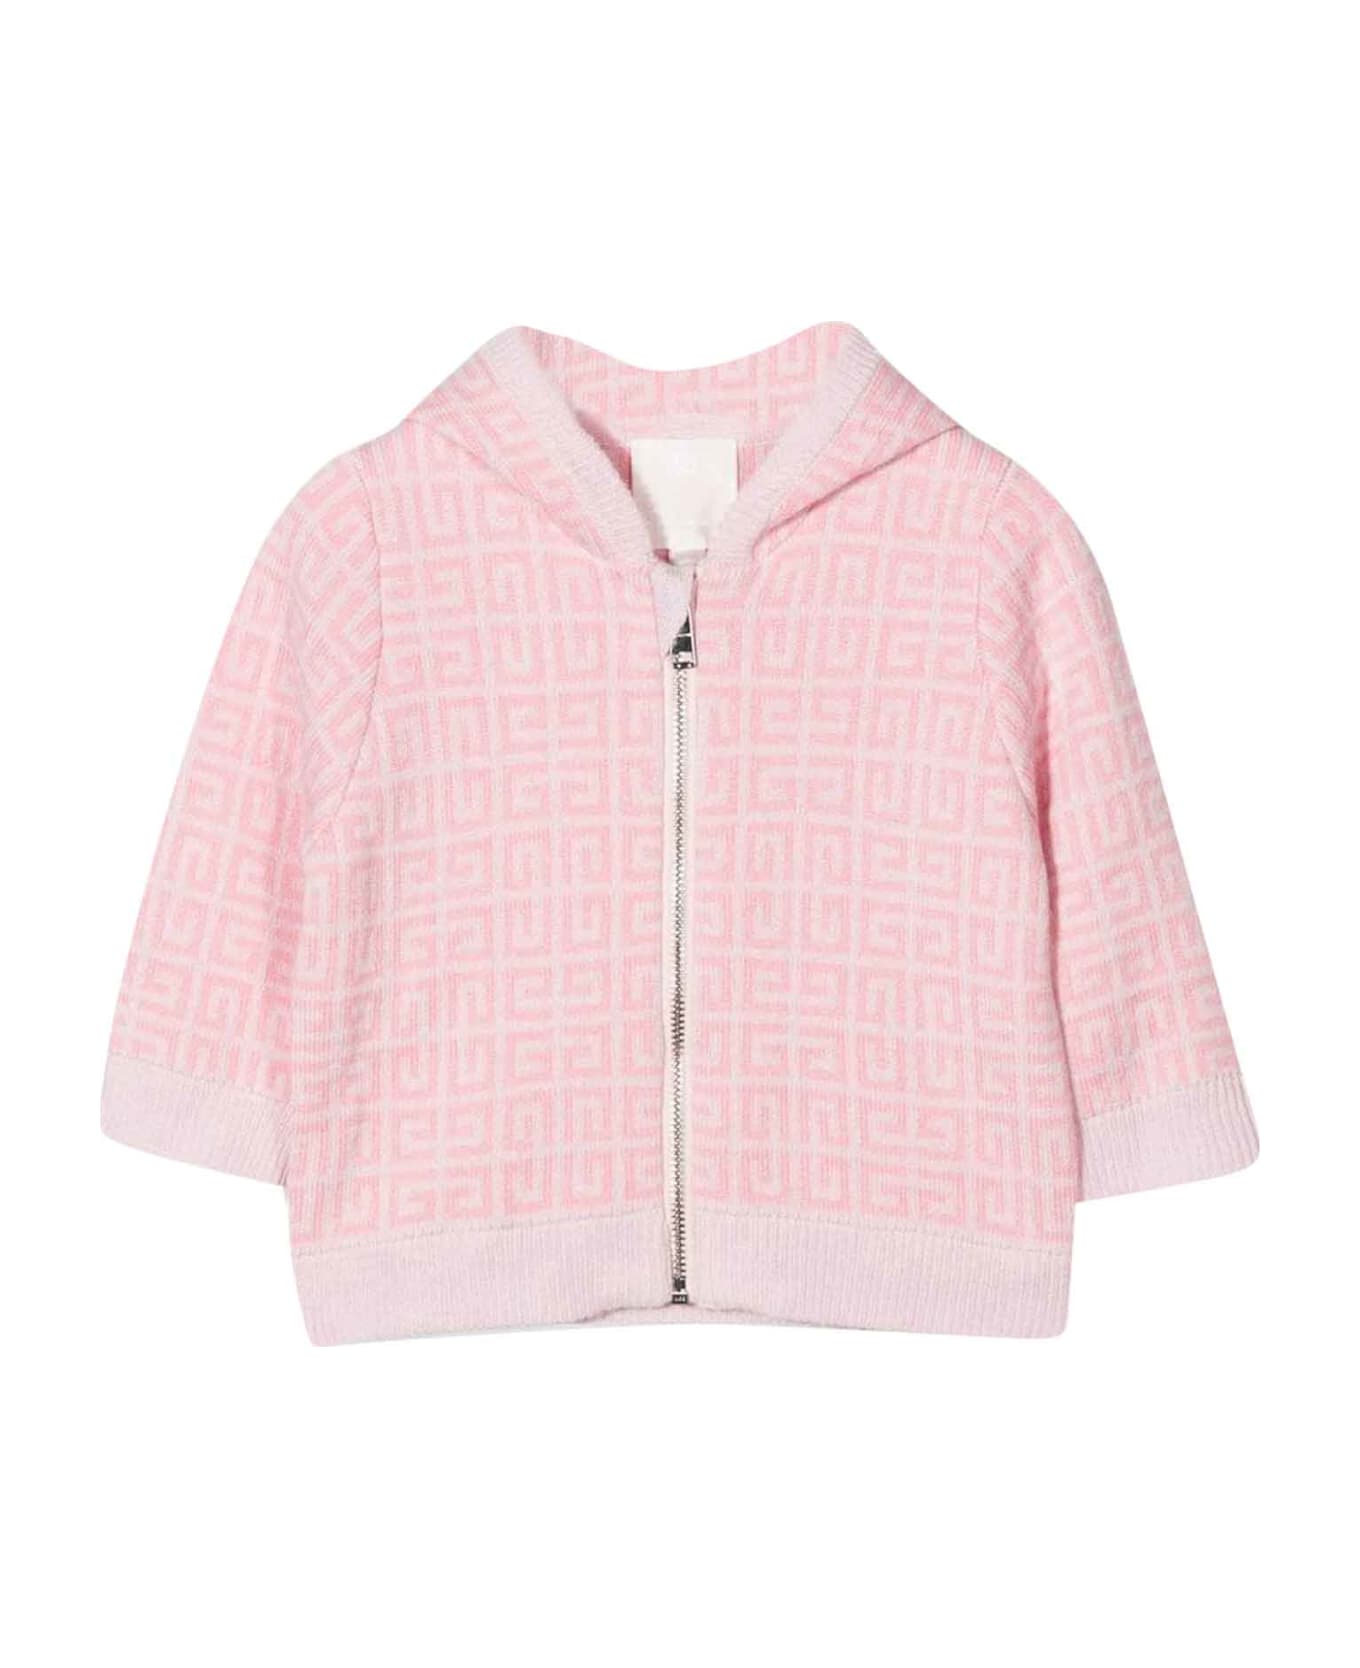 Givenchy Pink Sweatshirt Baby Unisex